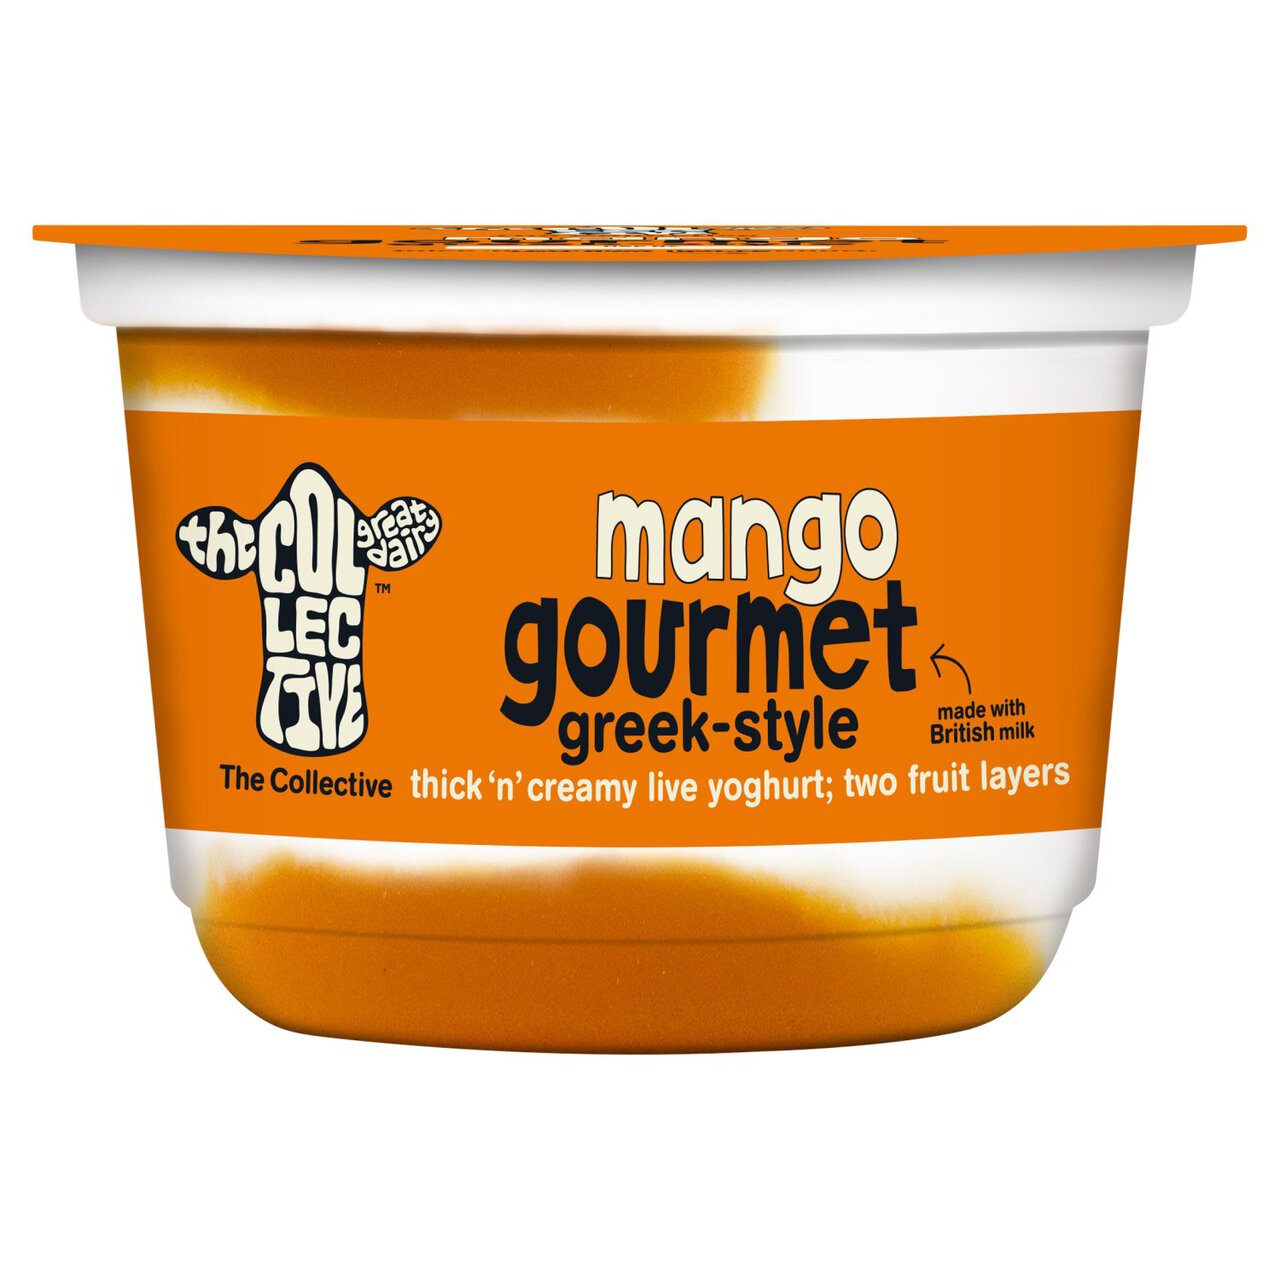 The Collective Mango Yoghurt 150g